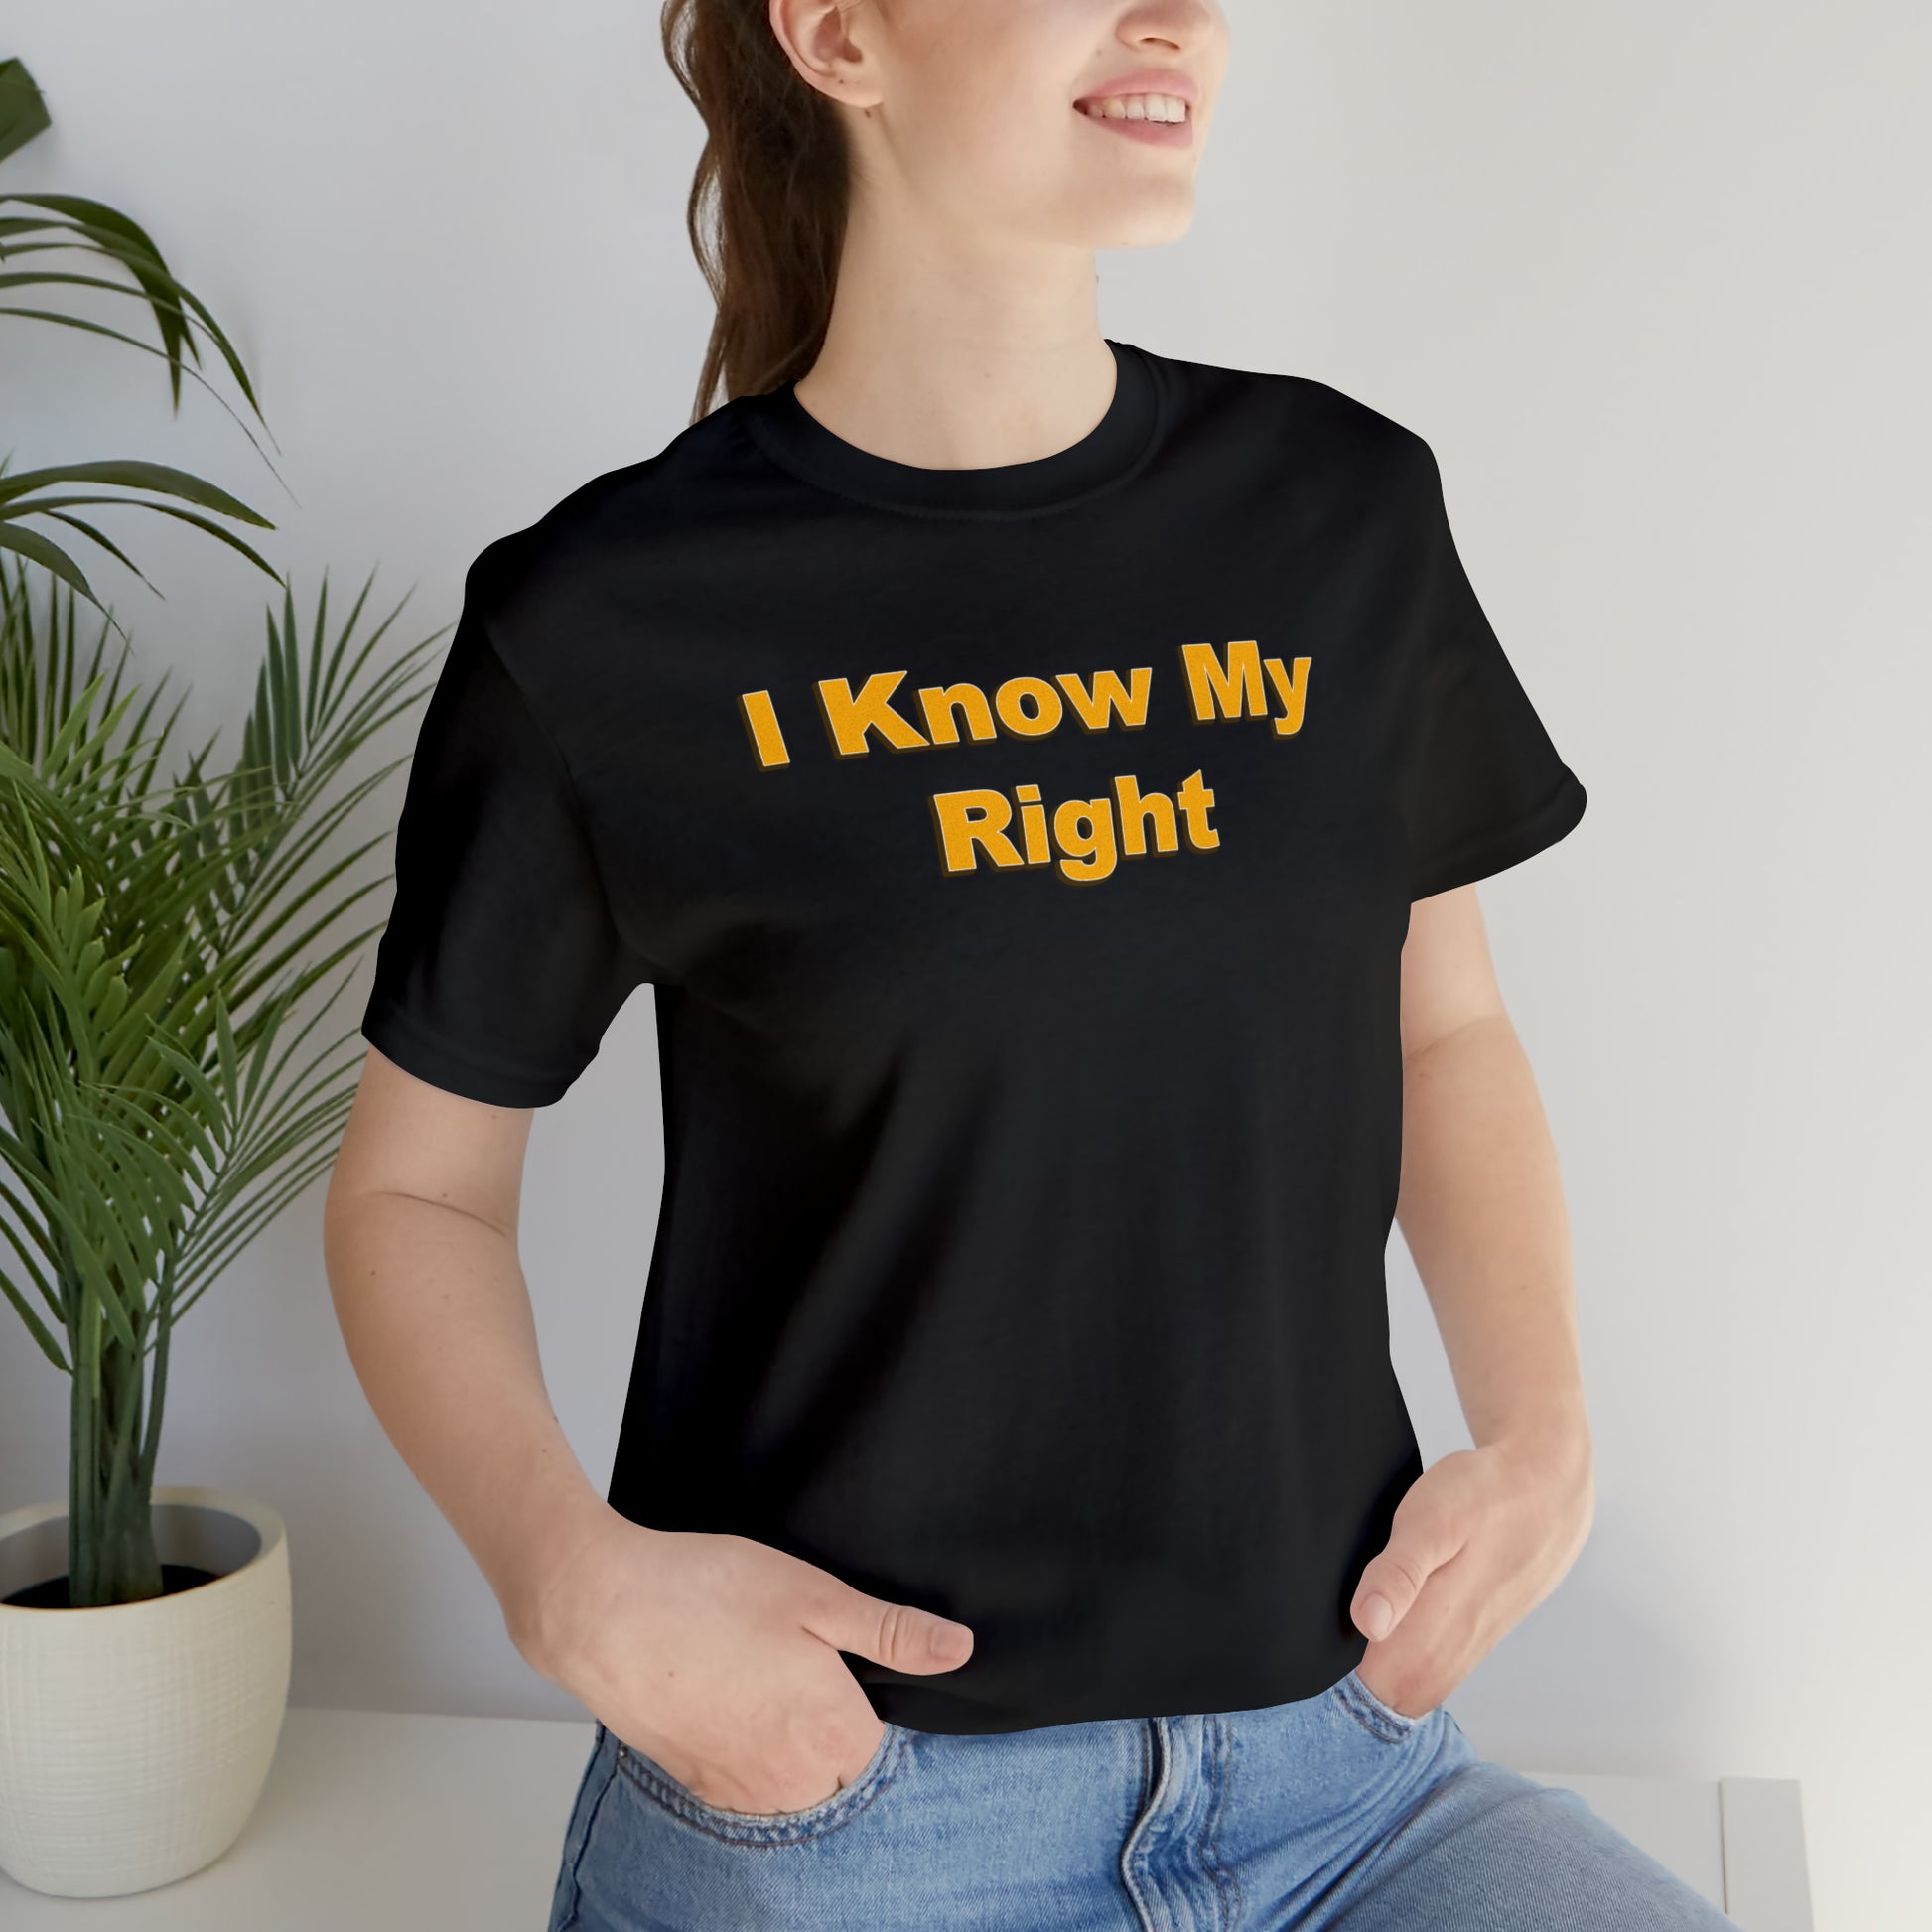 I KNOW MY RIGHT - Sammy Obeid